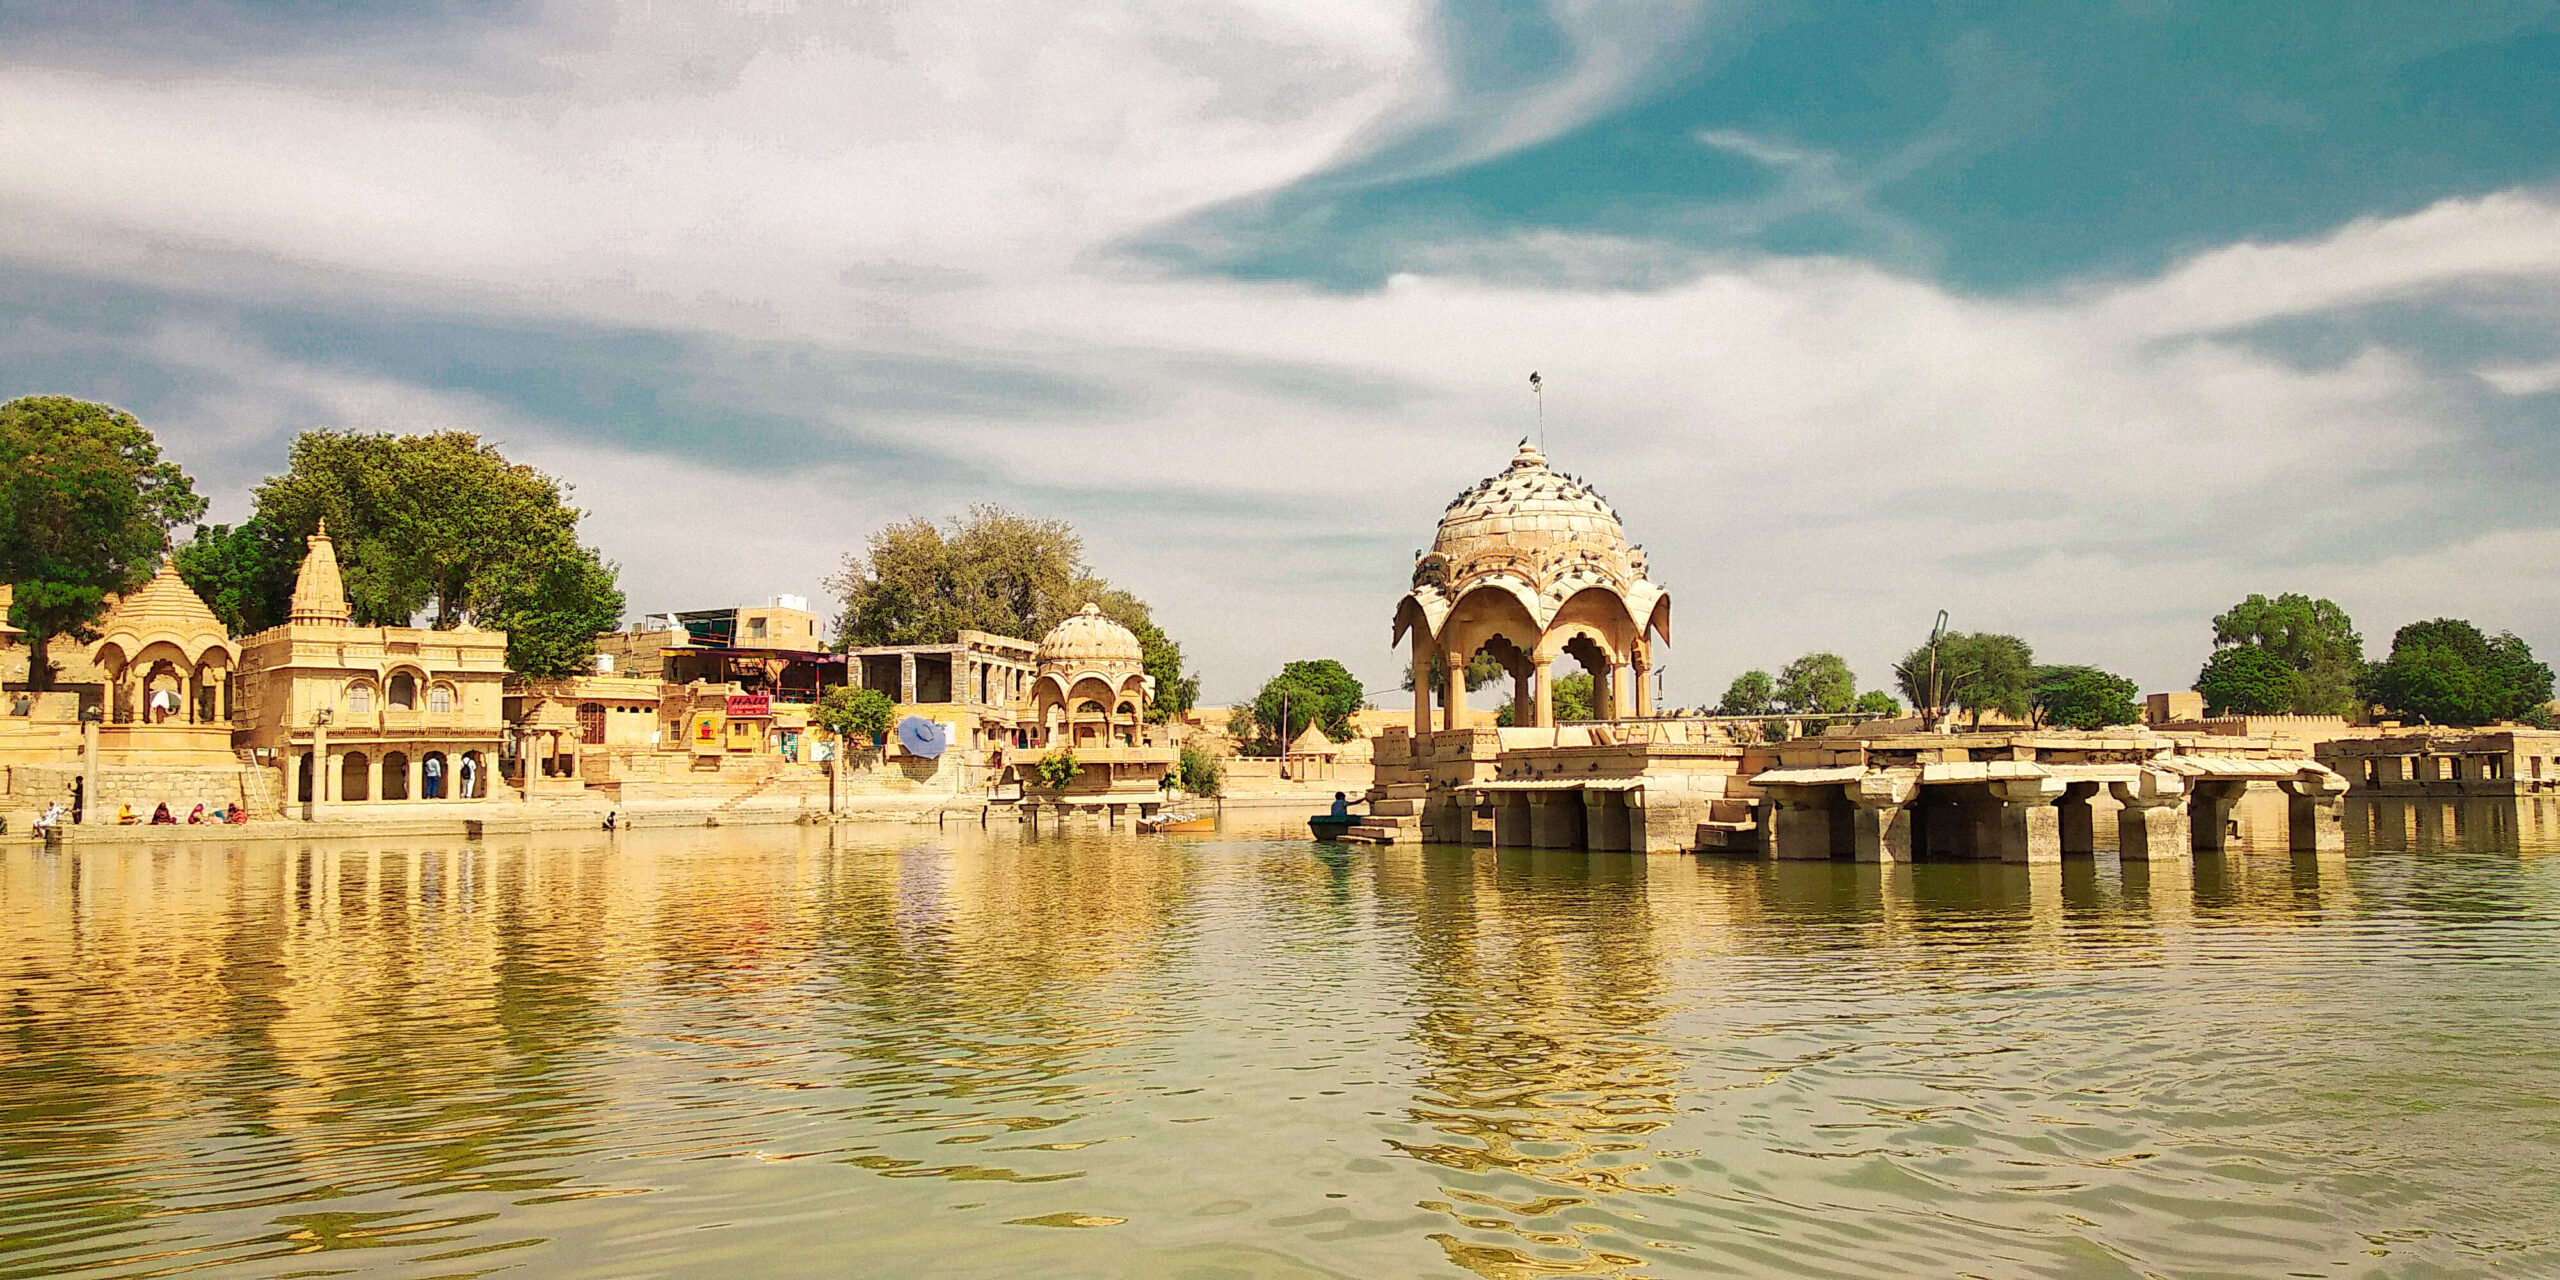 गडीसर झील जैसलमेर | Gadisar Lake Jaisalmer in hindi